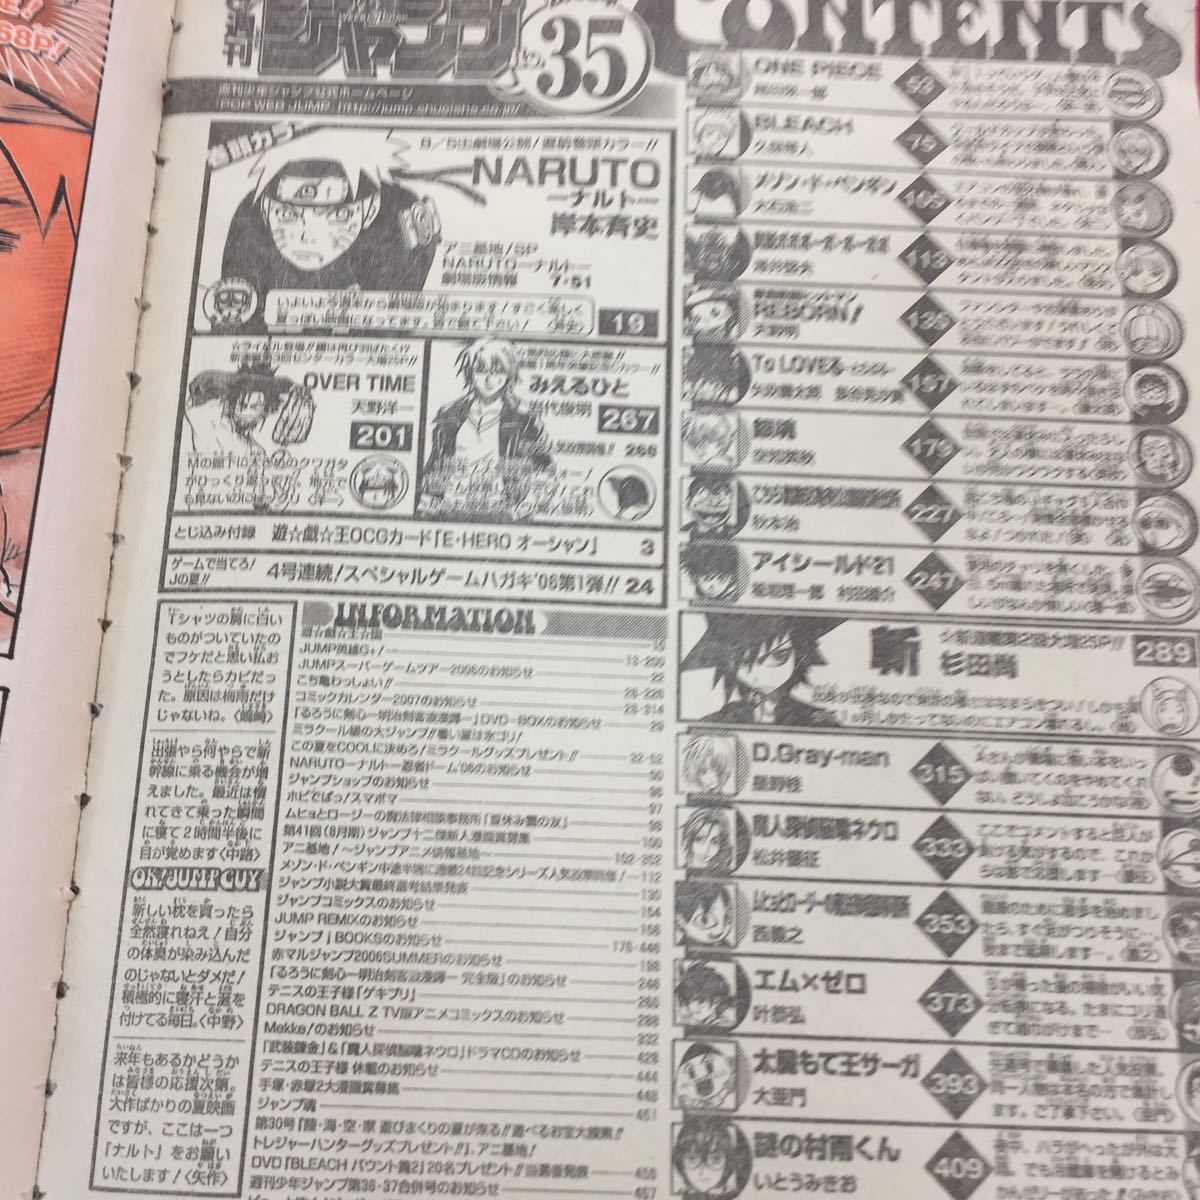 D3 0224 014 週刊 ジャンプ No 35 3 14日特大号 Naruto ナルト 集英社 Over Time みえるひと 斬 One Piece 他 9 Buyee Buyee 日本の通販商品 オークションの代理入札 代理購入